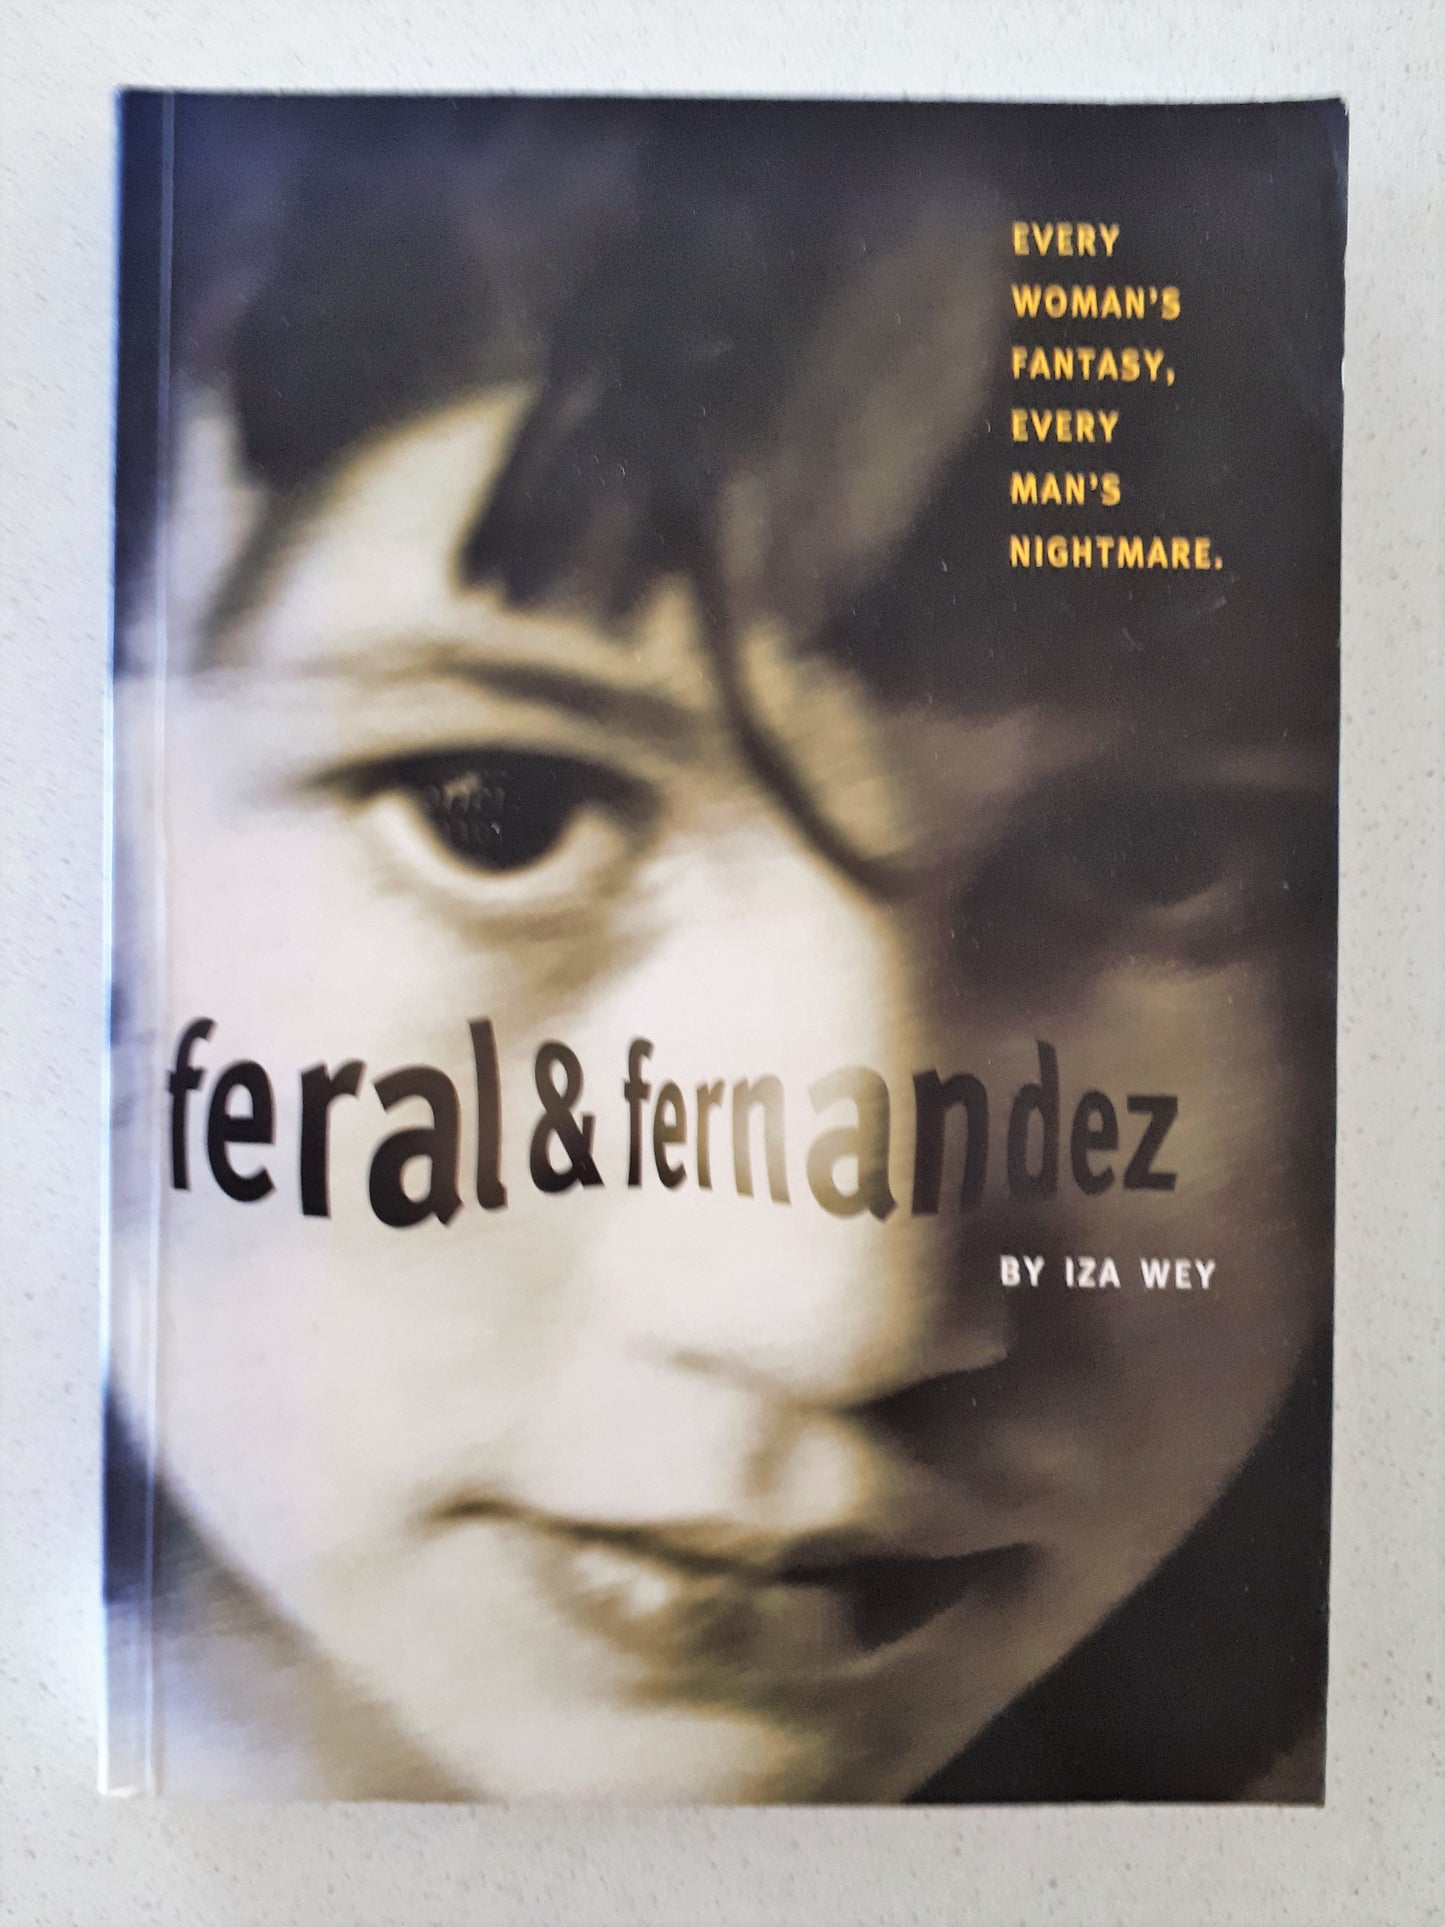 Feral & Fernandez by Iza Wey